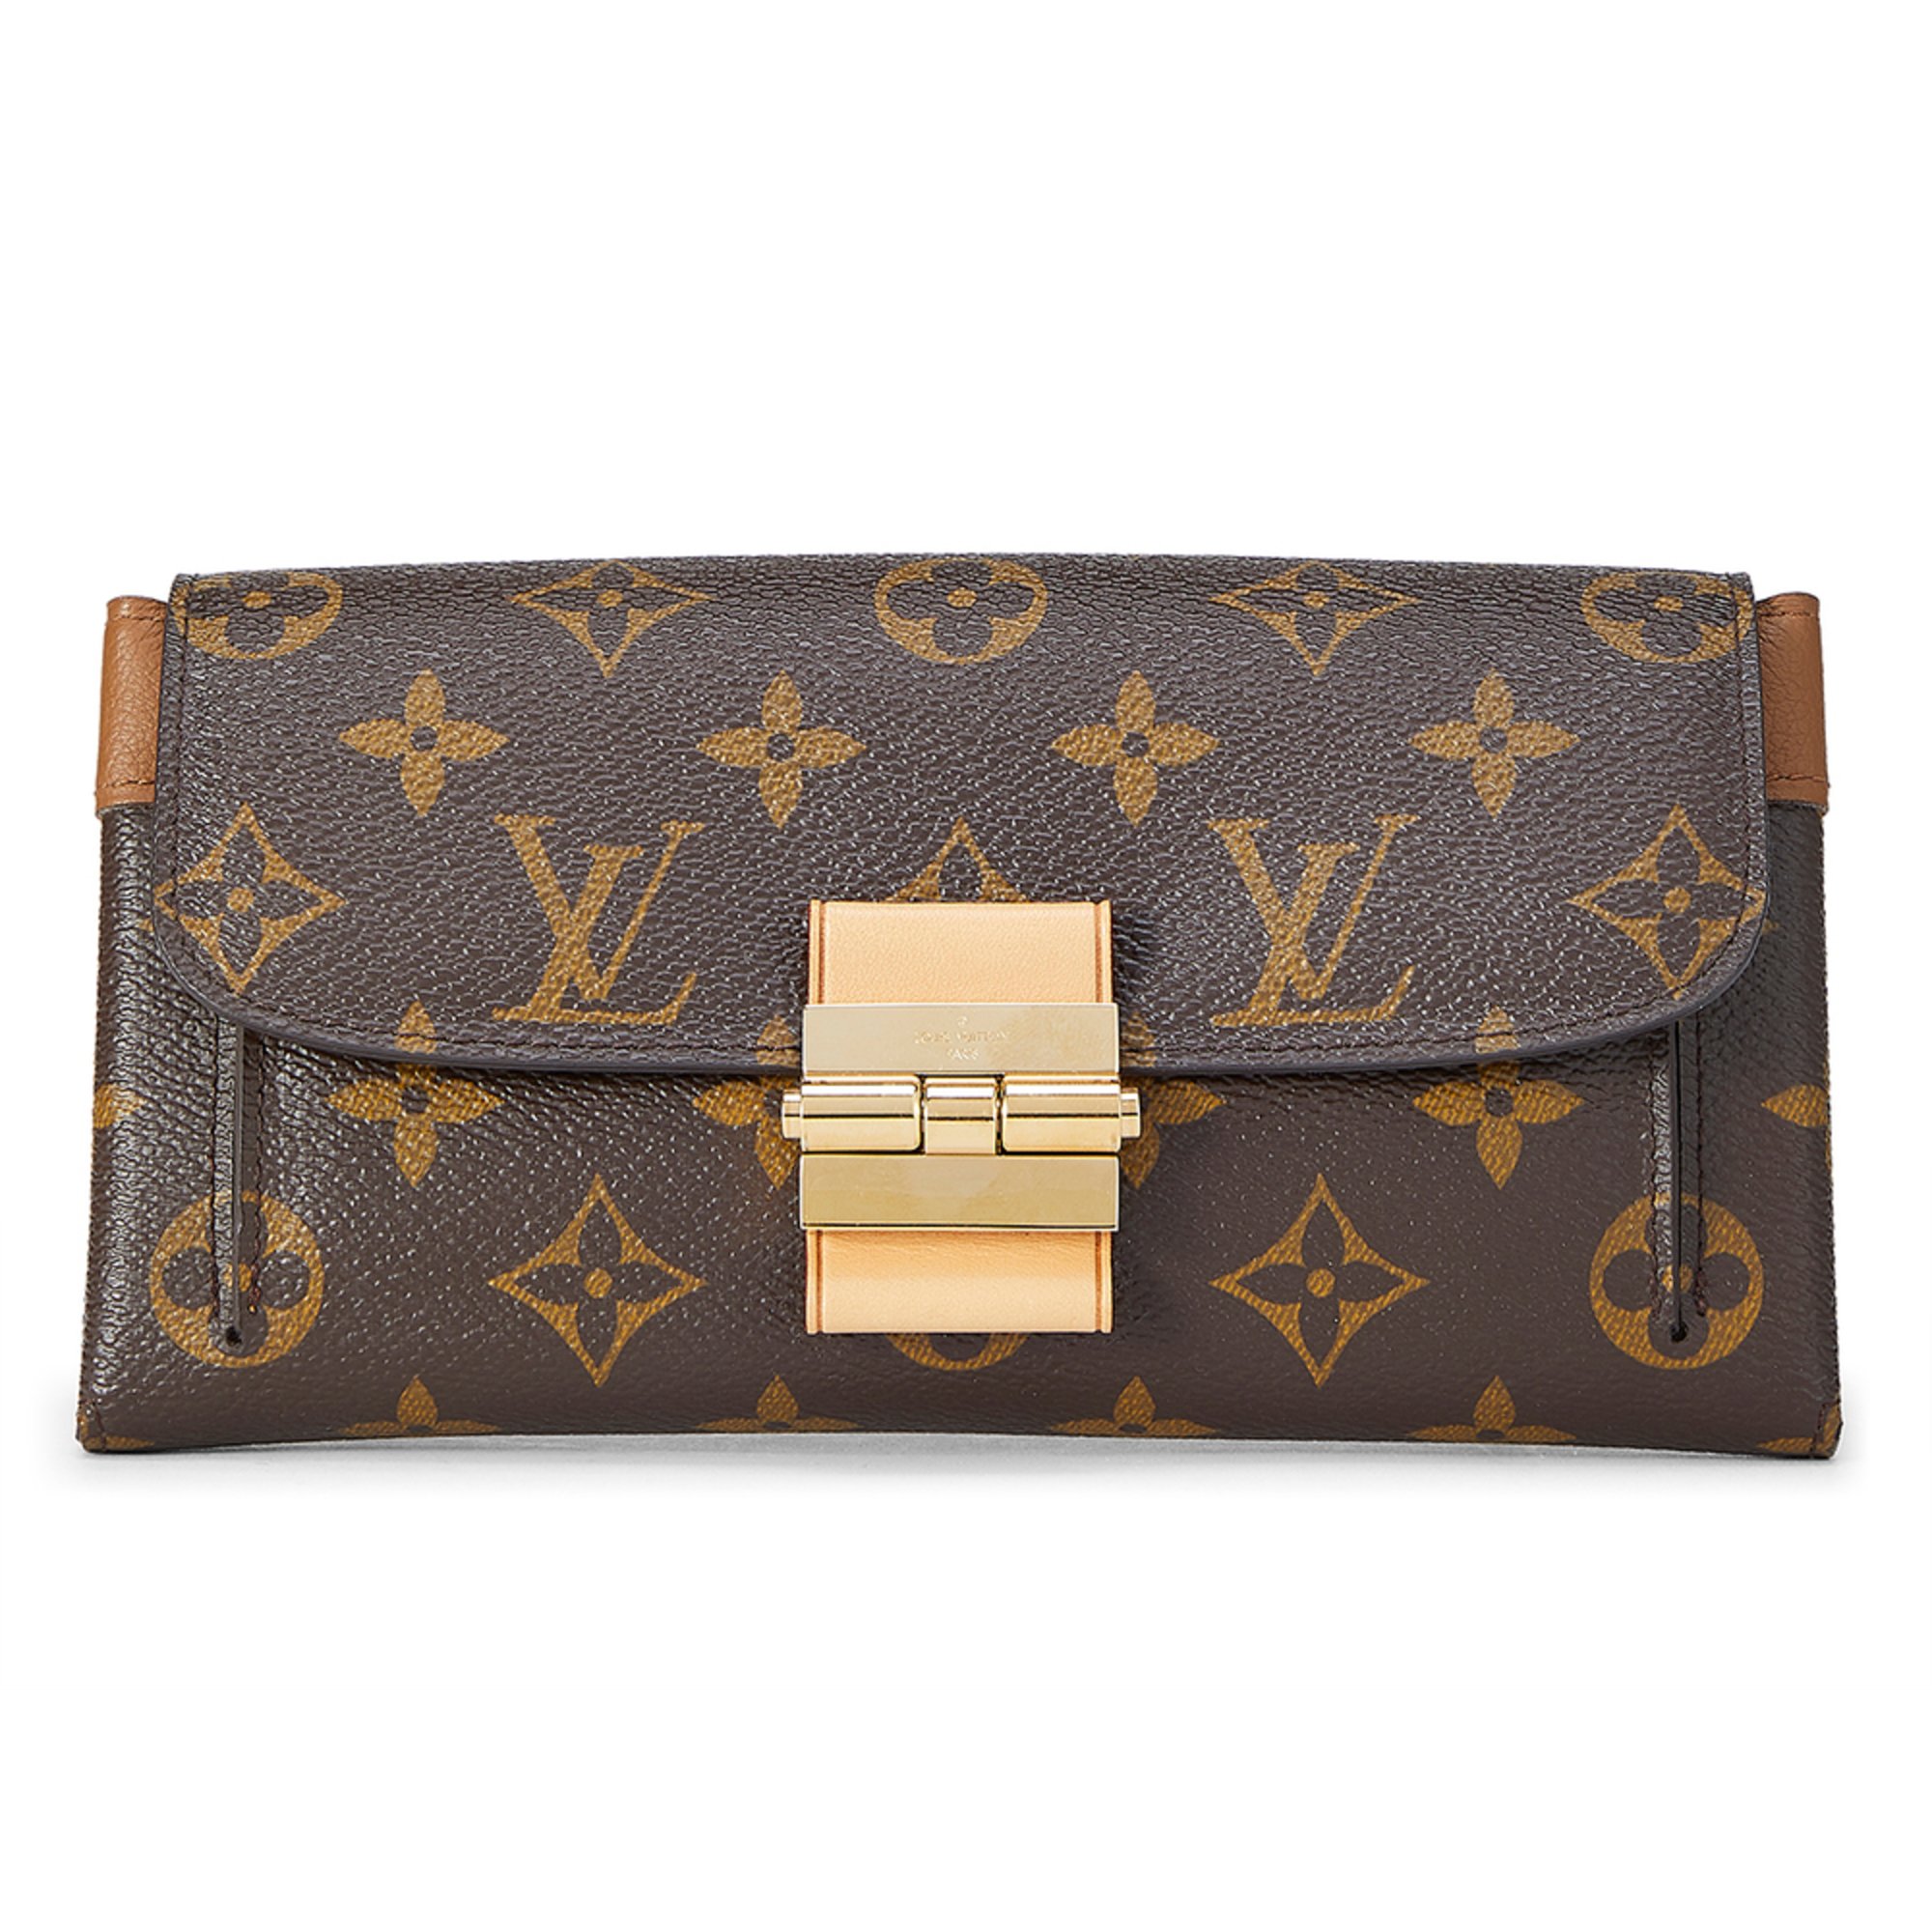 Louis Vuitton Monogram Portefeuille Elise | Handbags | Accessories - Shop Your Navy Exchange ...